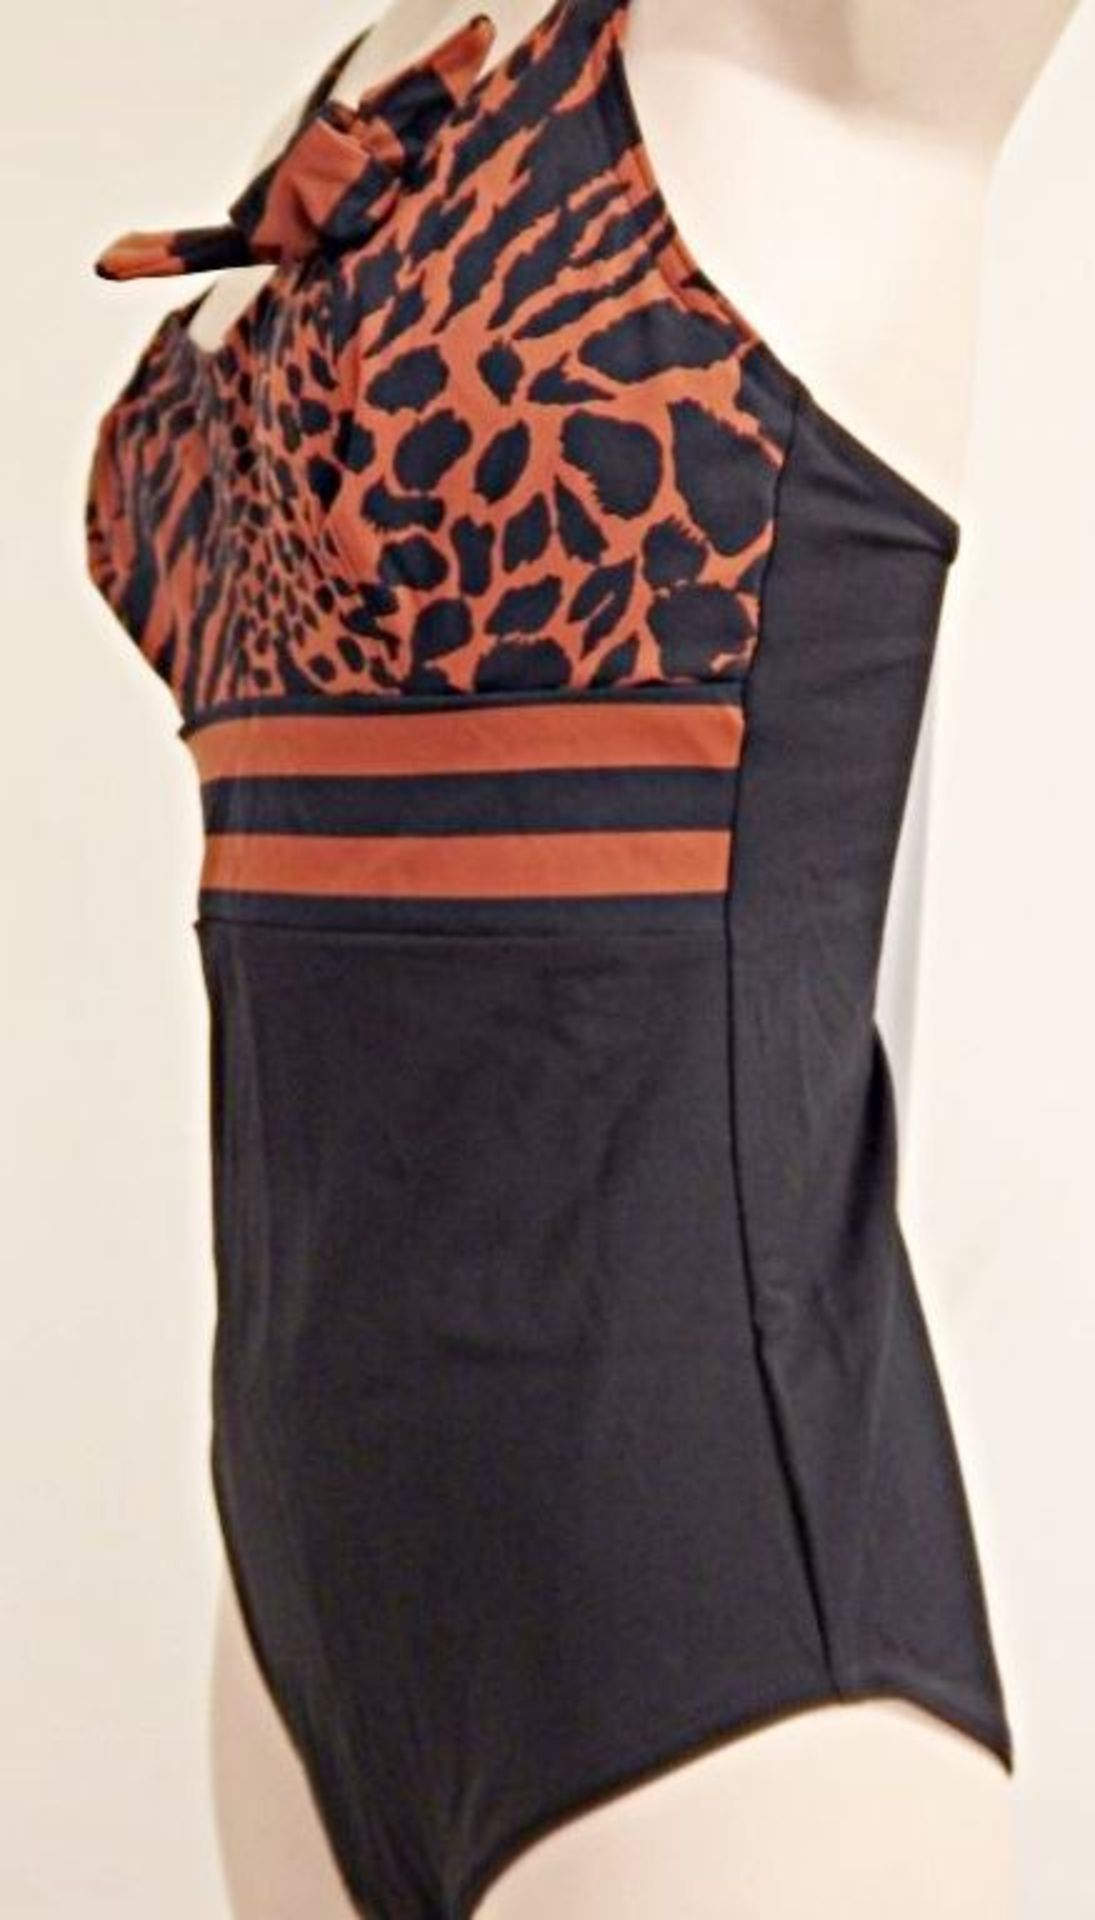 1 x Rasurel - Black/Tan Leopard and Stripe - Bahia Swimsuit - R21235 - Size 2C - UK 32 - Fr 85 - EU - Image 6 of 7